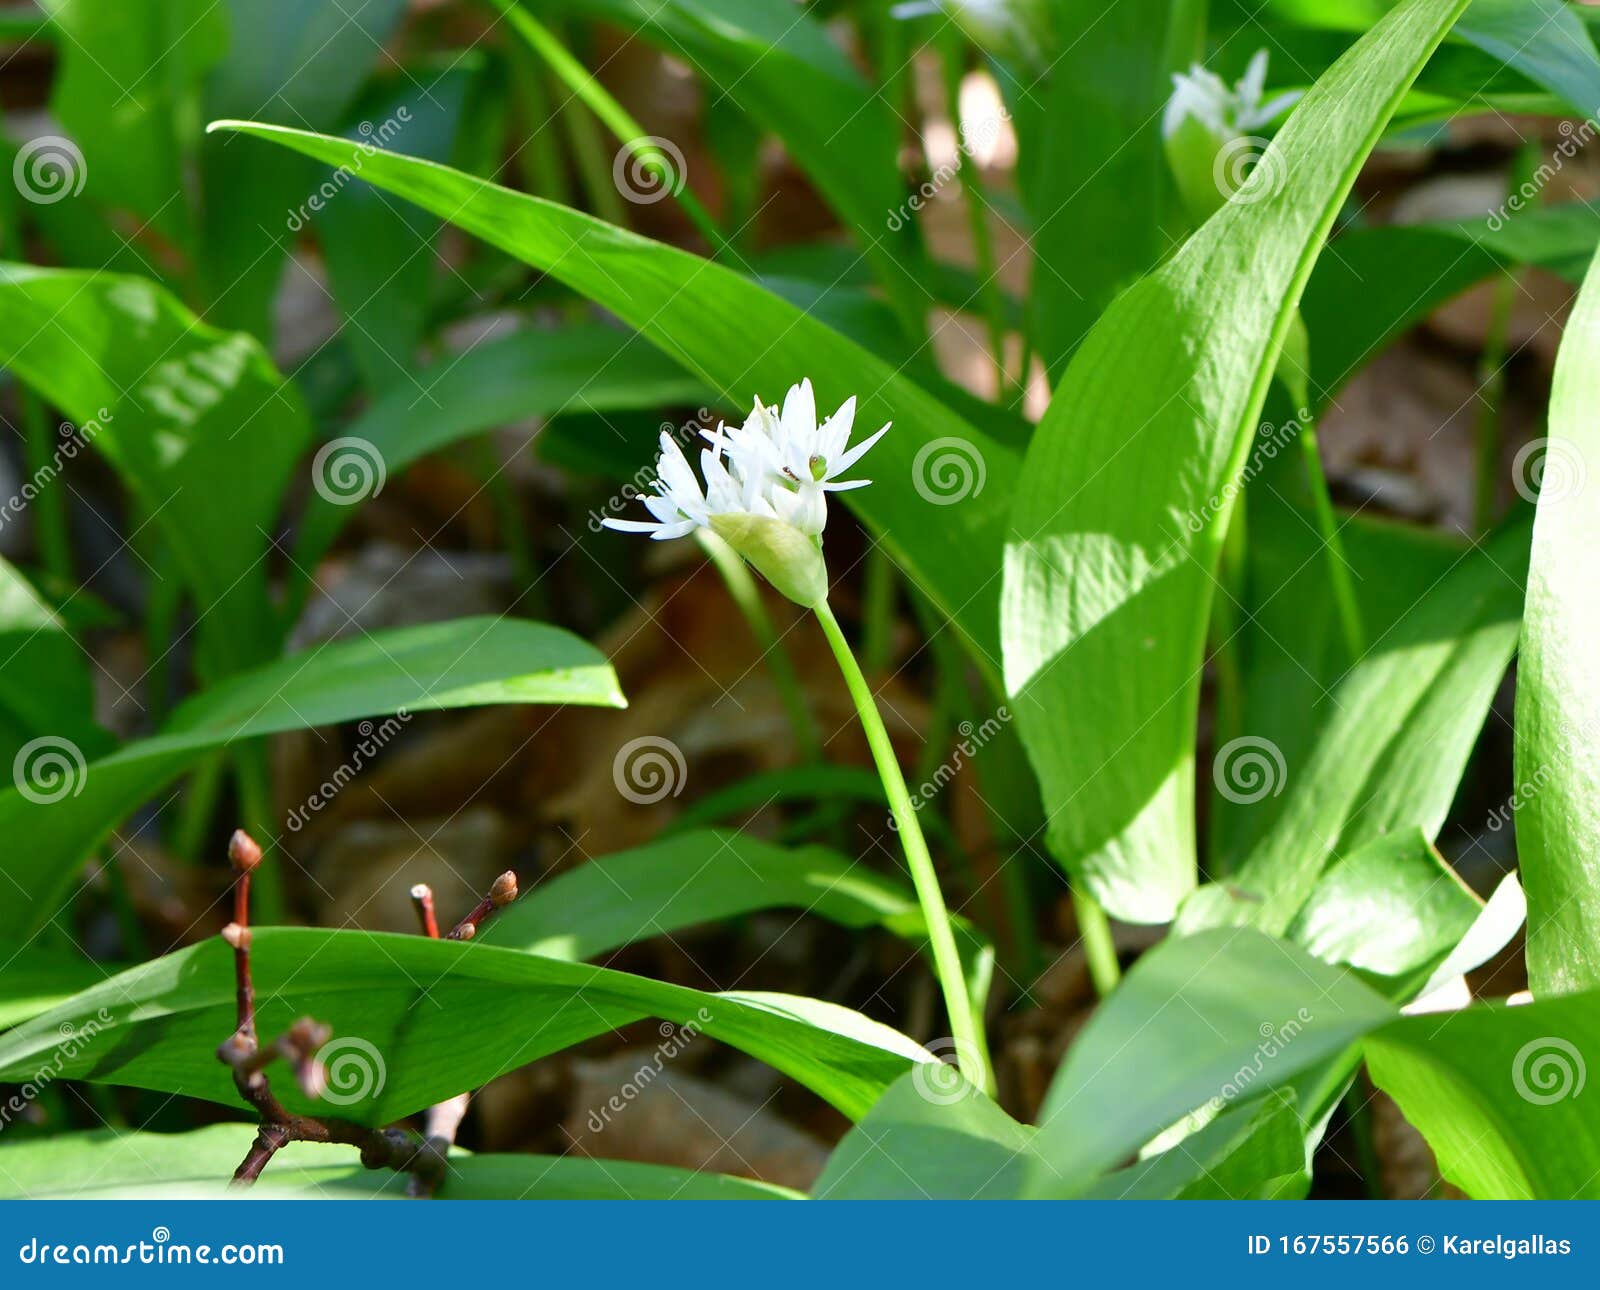 Allium Ursinum or Wild Garlic Stock Photo   Image of green, bear ...